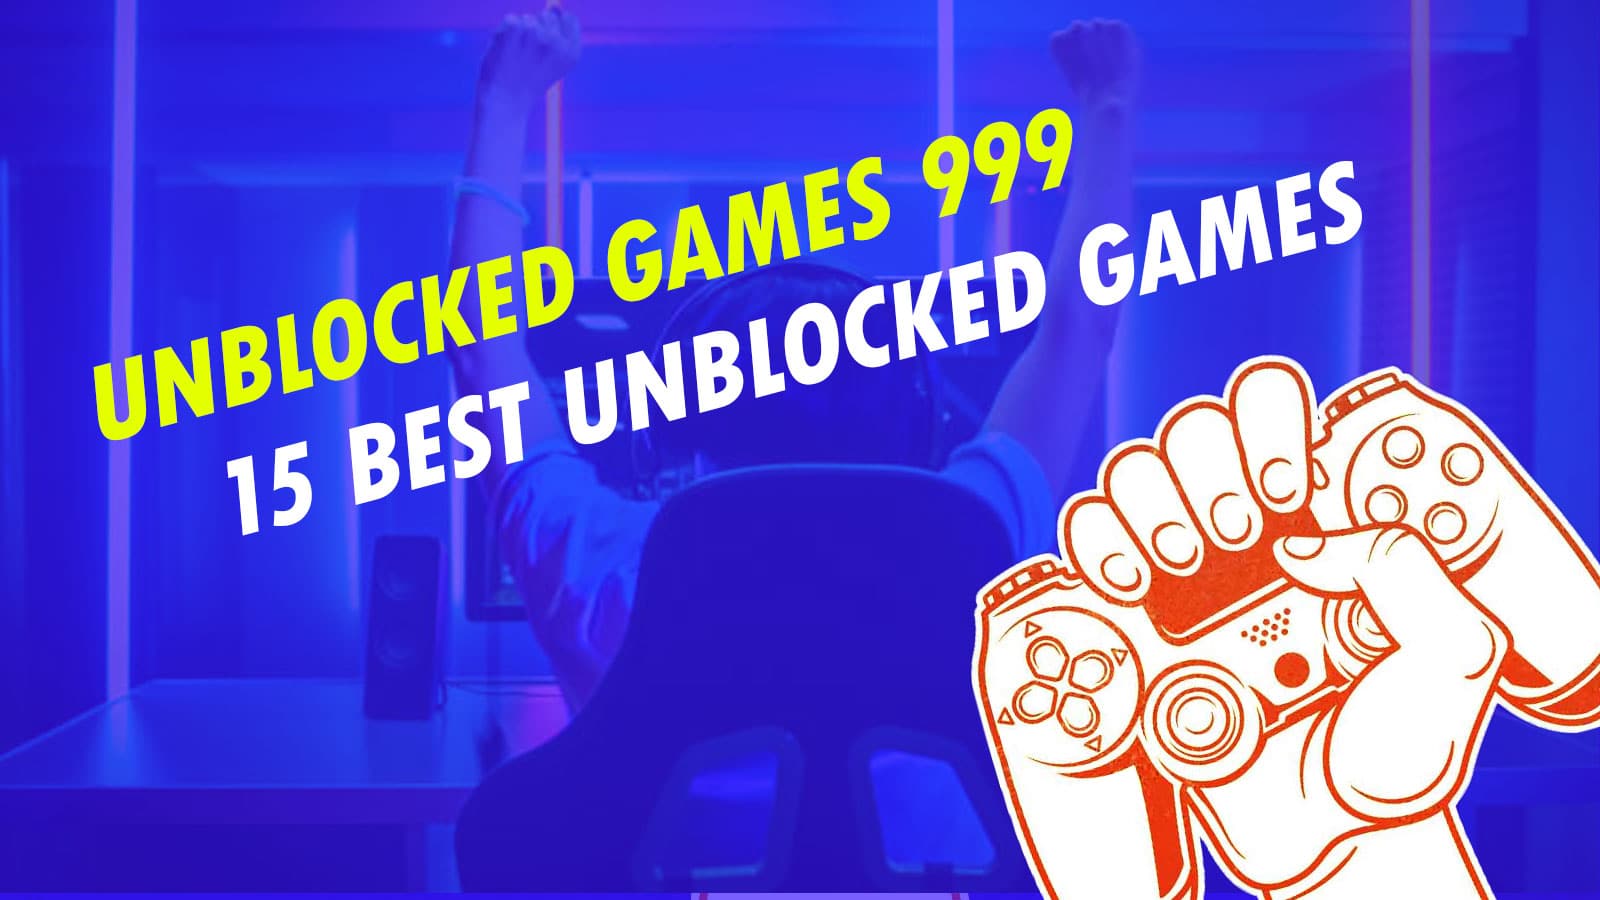 Unblocked Games 999 The 15 Best Unblocked Games List